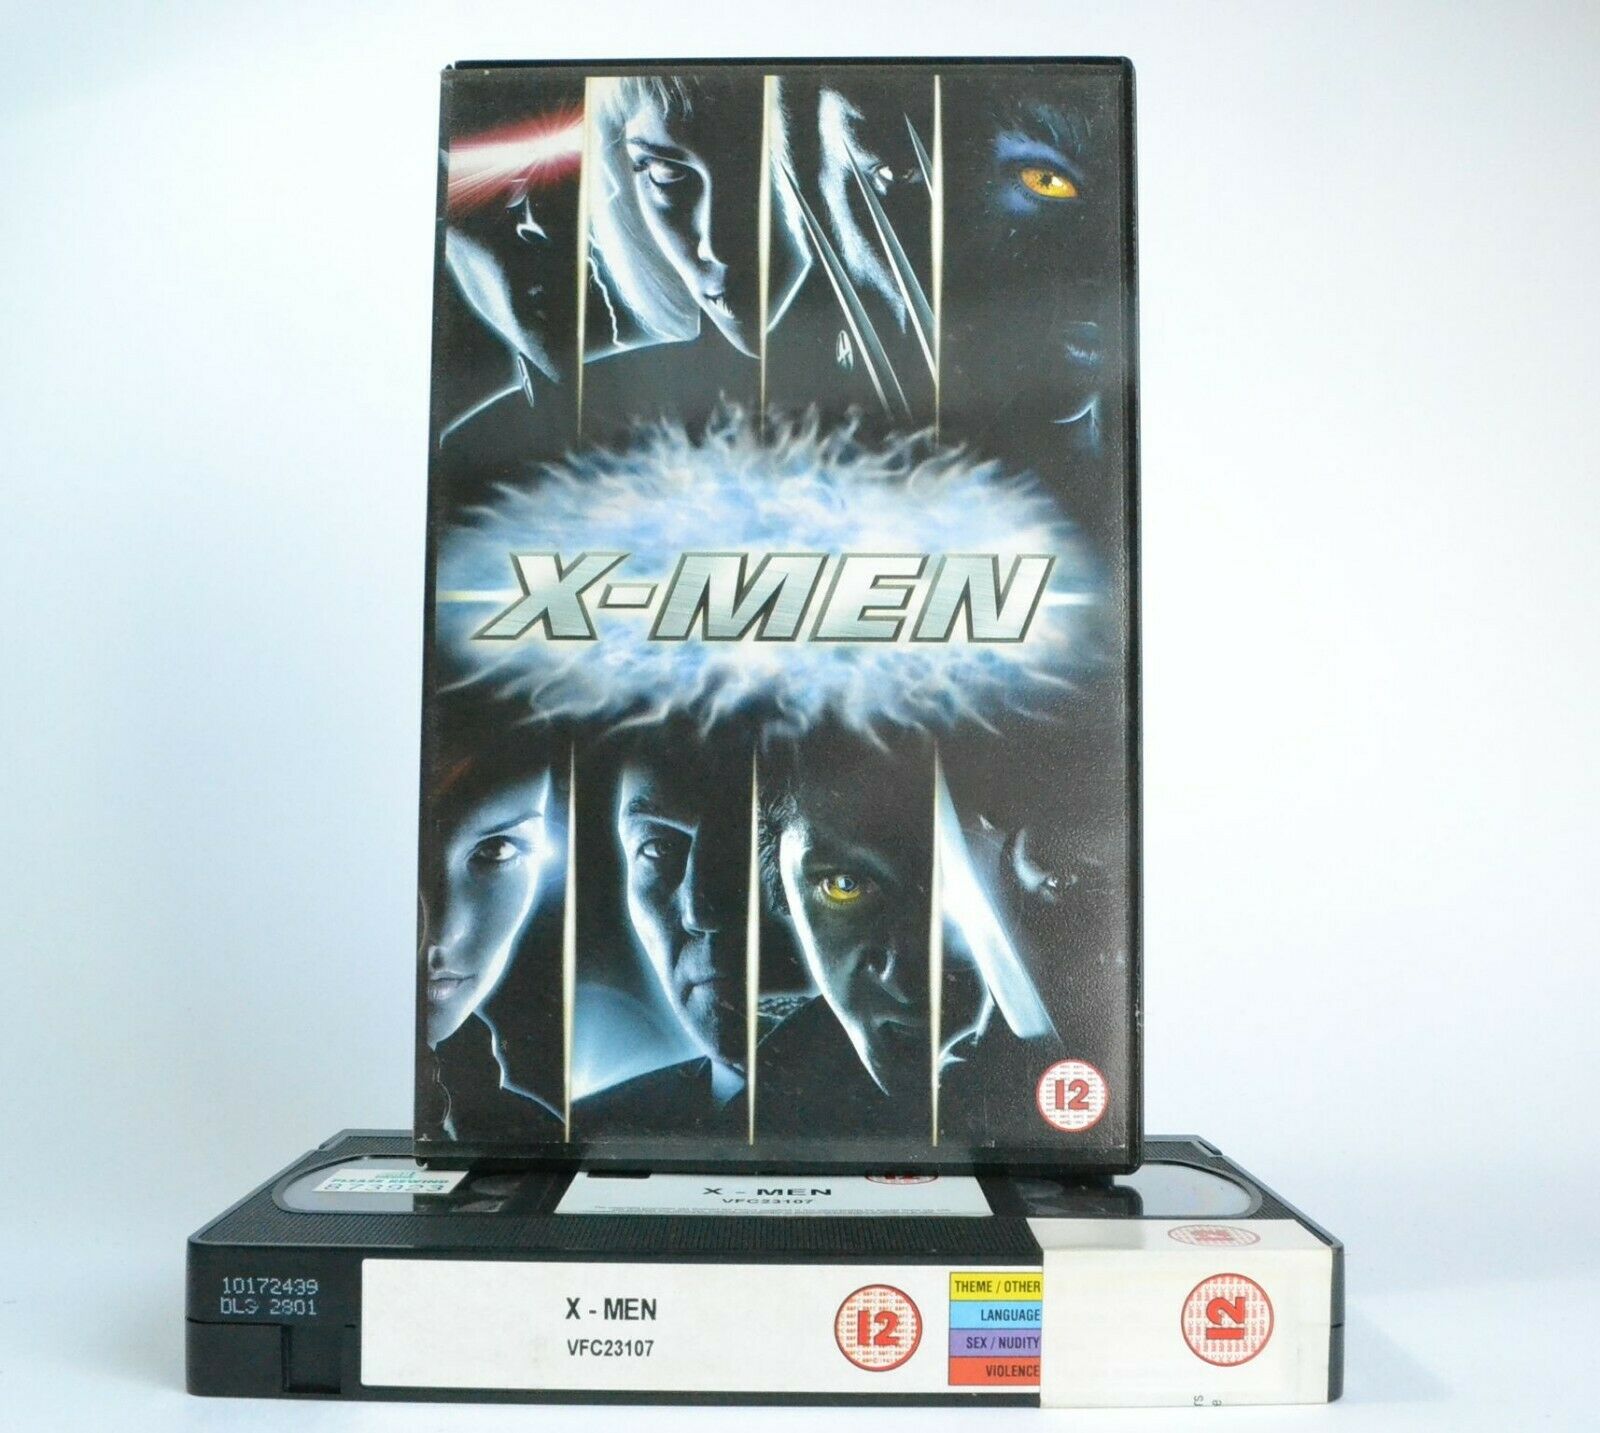 X-Men (2000): Superhero Movie - Large Box - Hugh Jackman/Halle Berry - VHS-